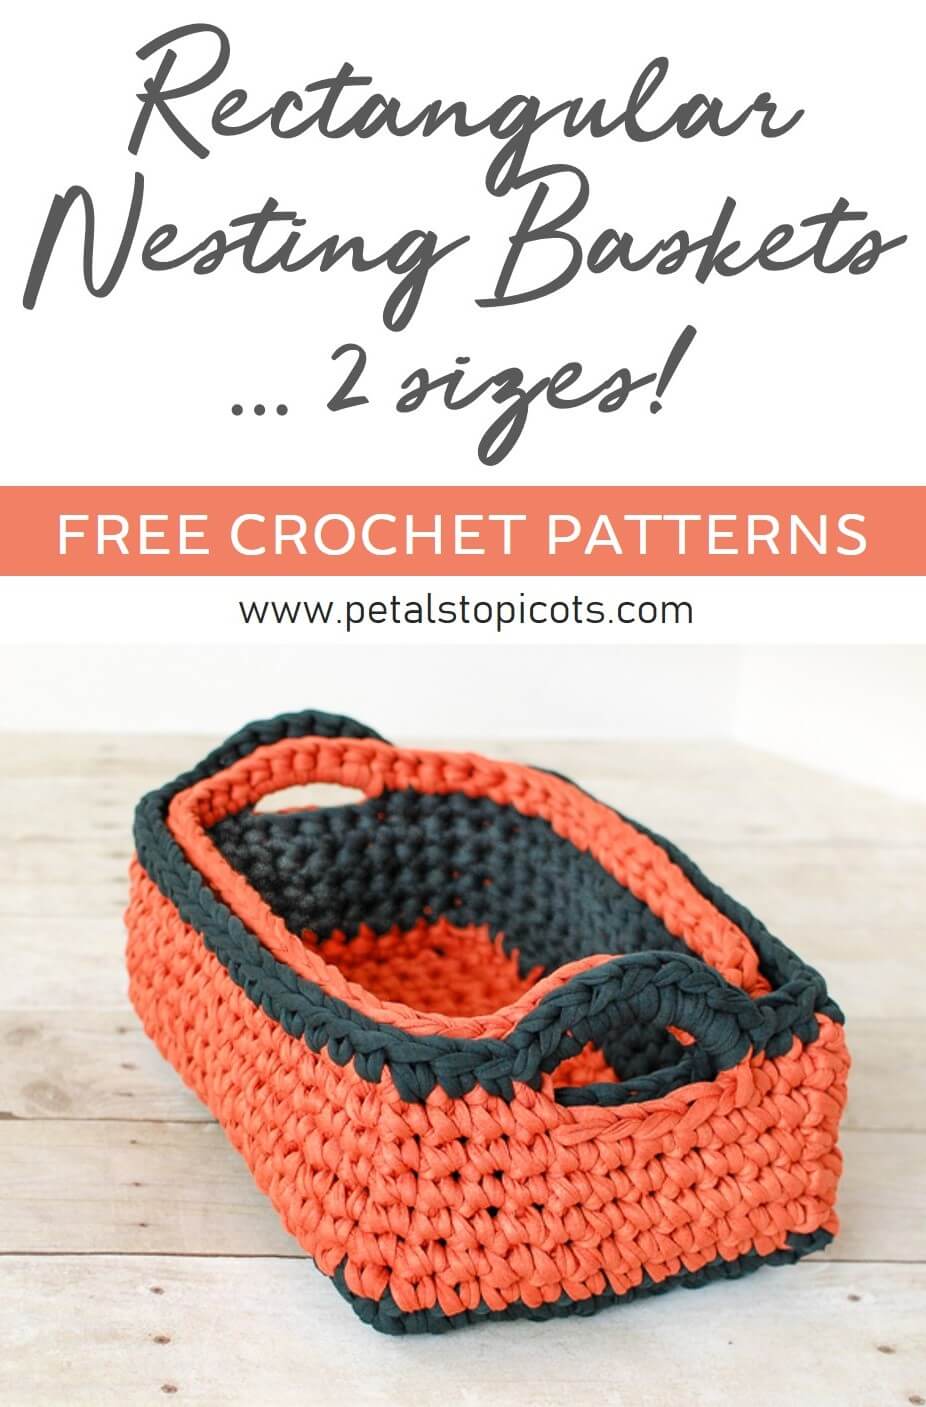 Rectangular Crochet Basket Pattern ... Two Nesting Sizes!